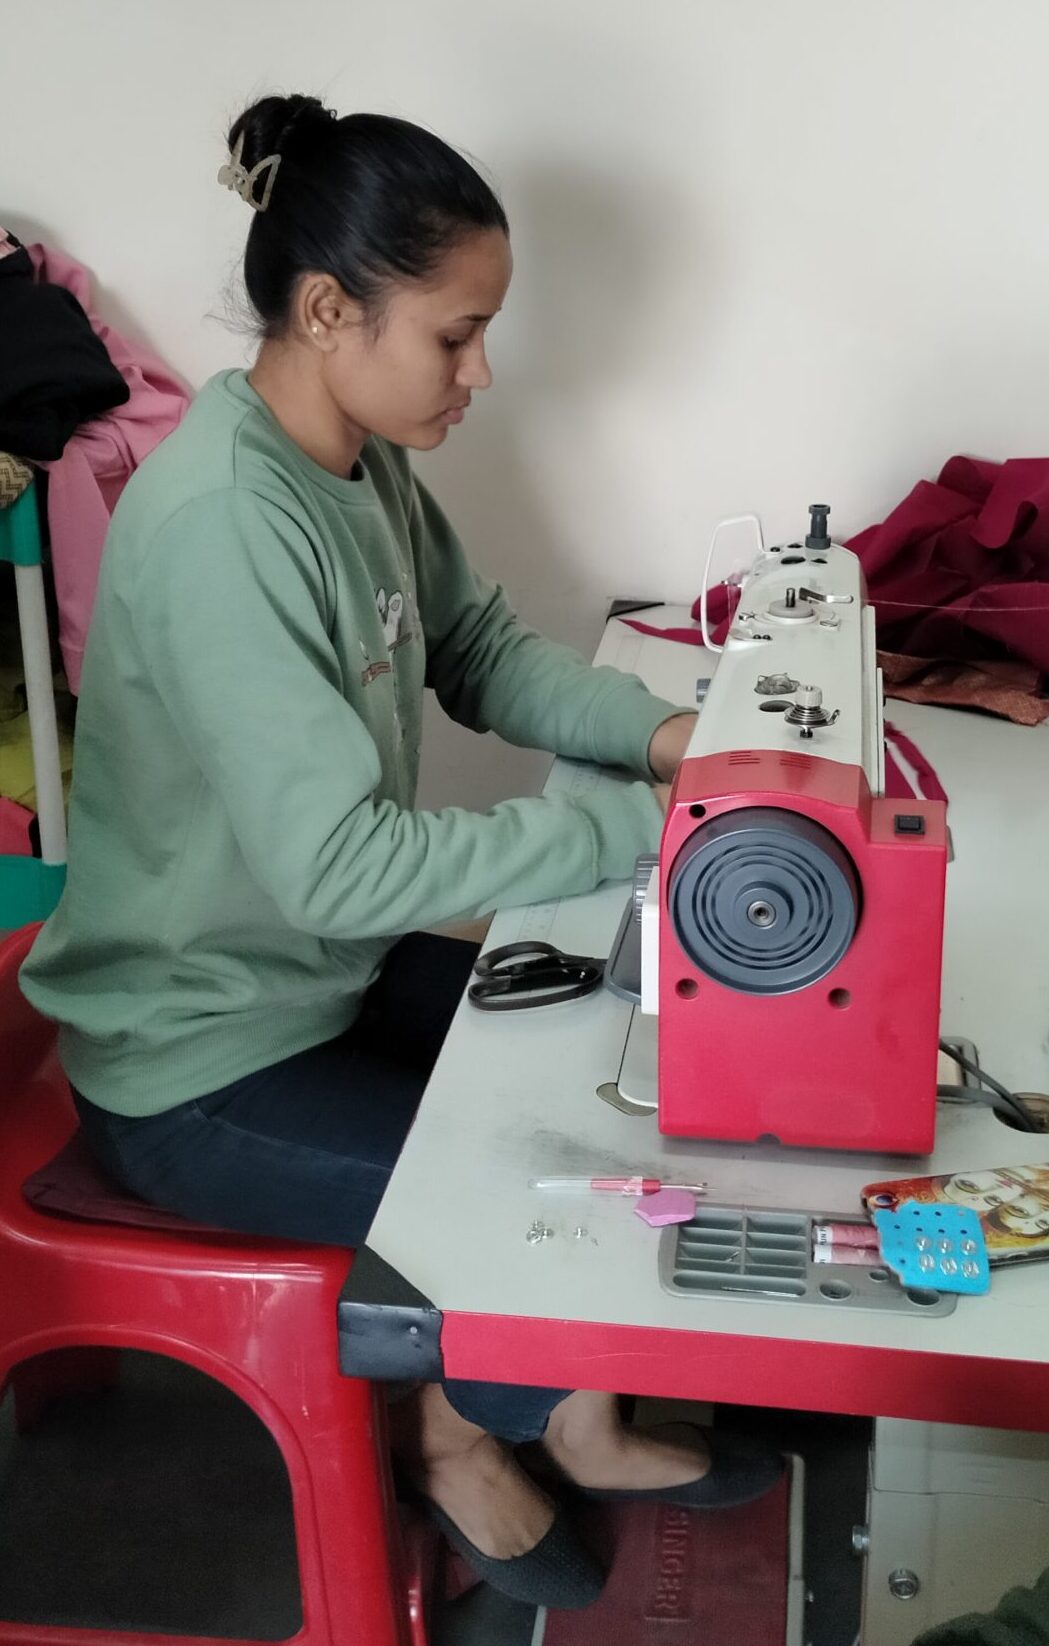 Jyoti sewing using her electric sewing machine